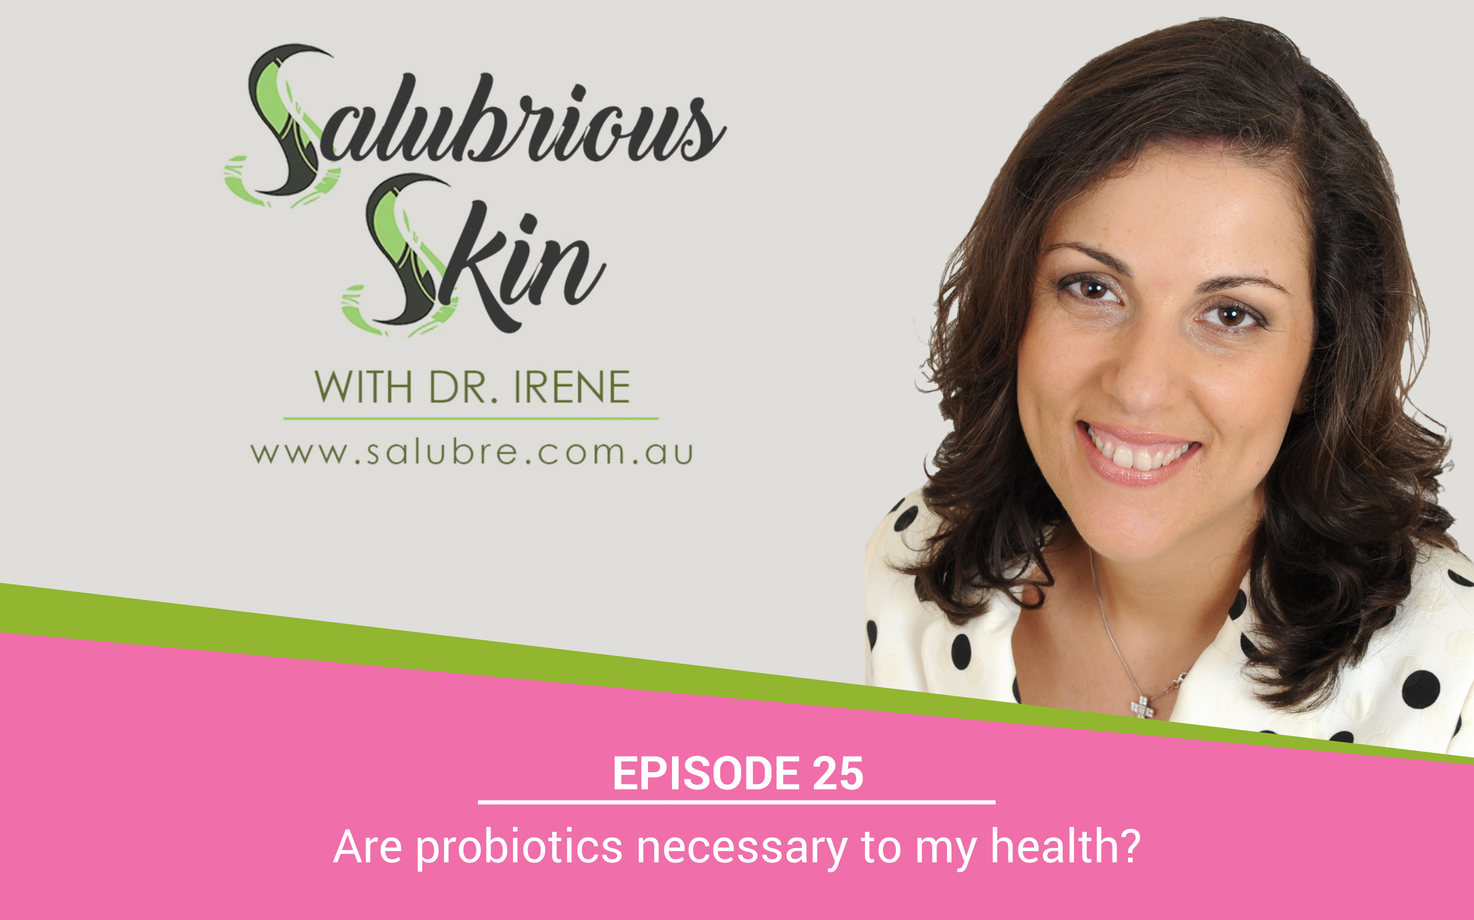 Episode 25: Are probiotics necessary for my health?